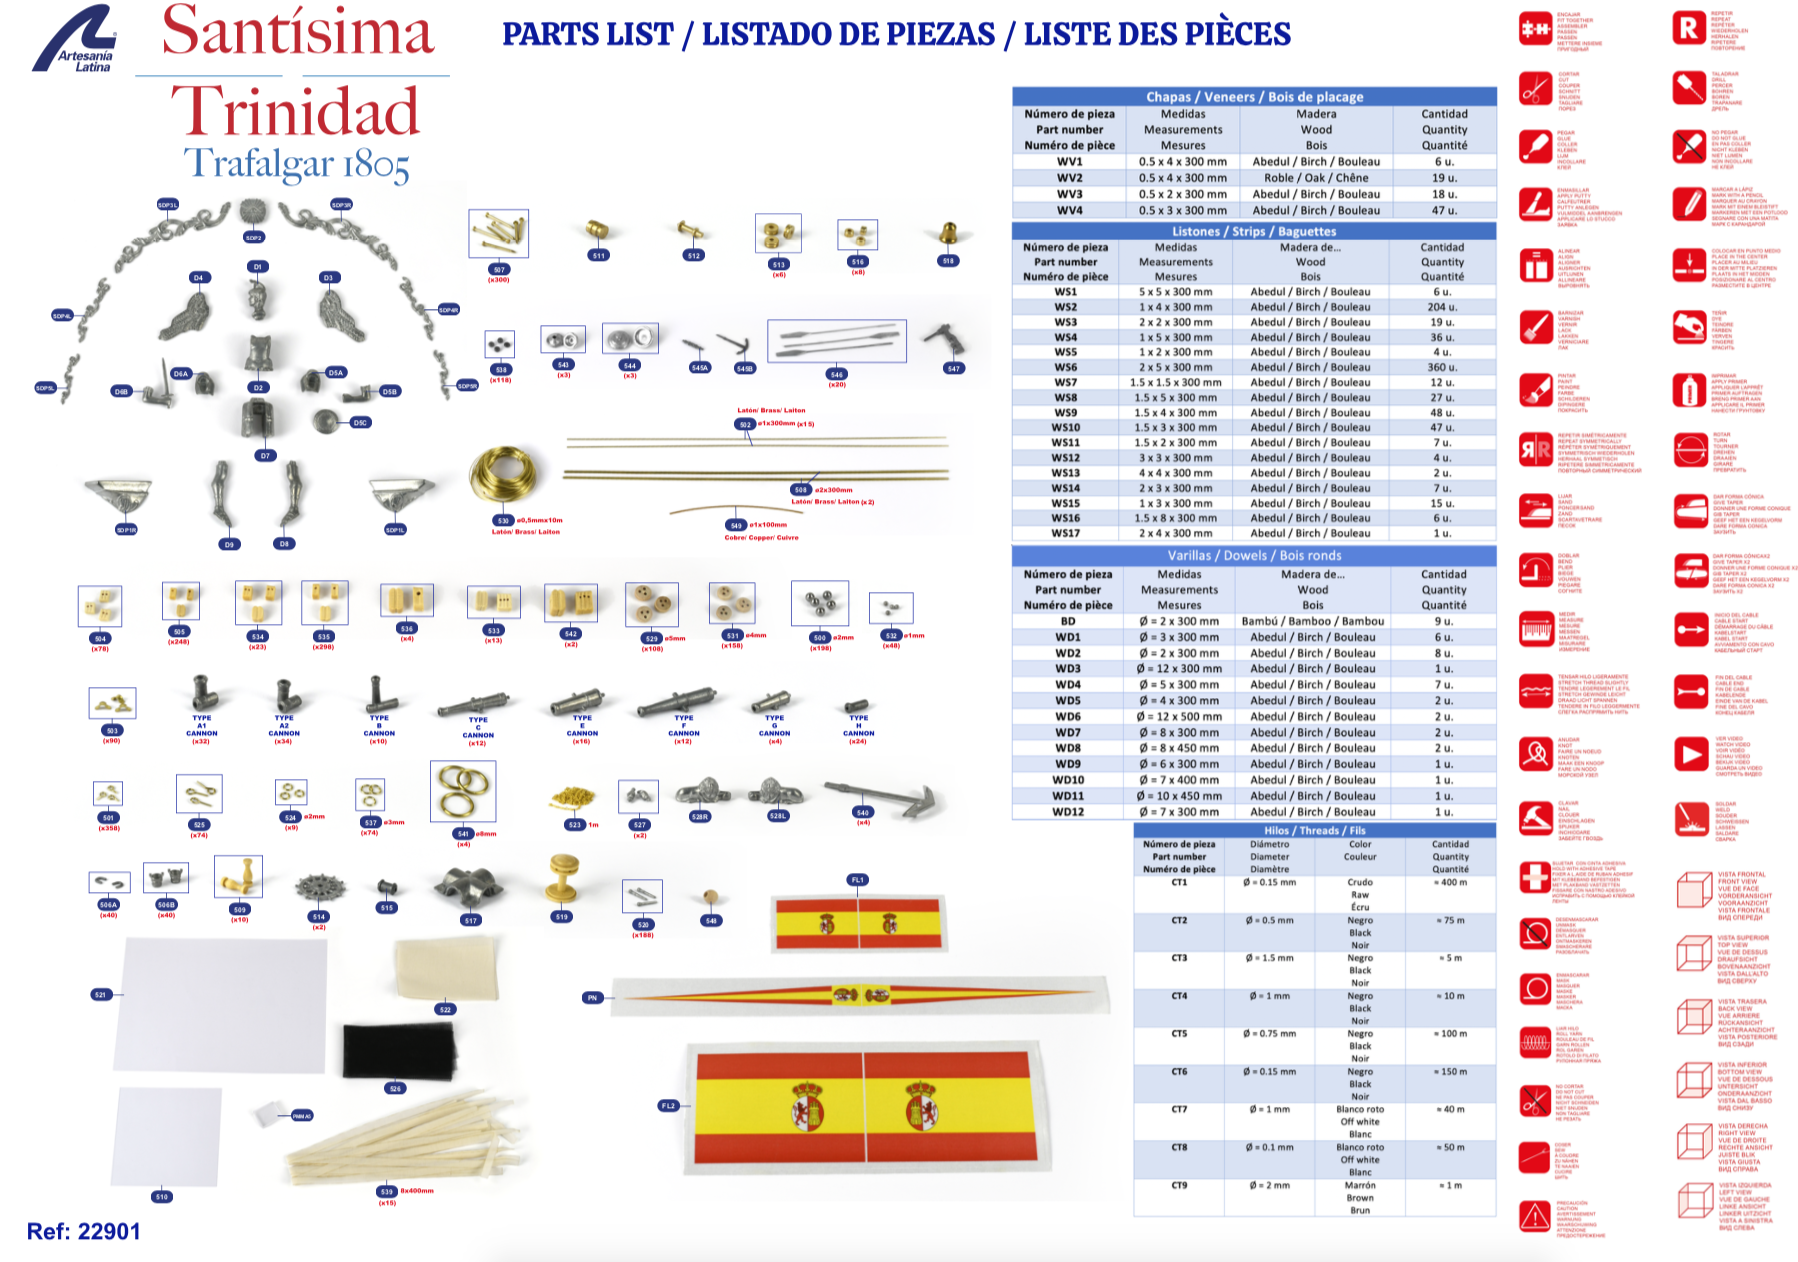 Parts List of Wooden Naval Modeling Kit Spanish Ship of the Line Santisima Trinidad (22901) by Artesanía Latina.